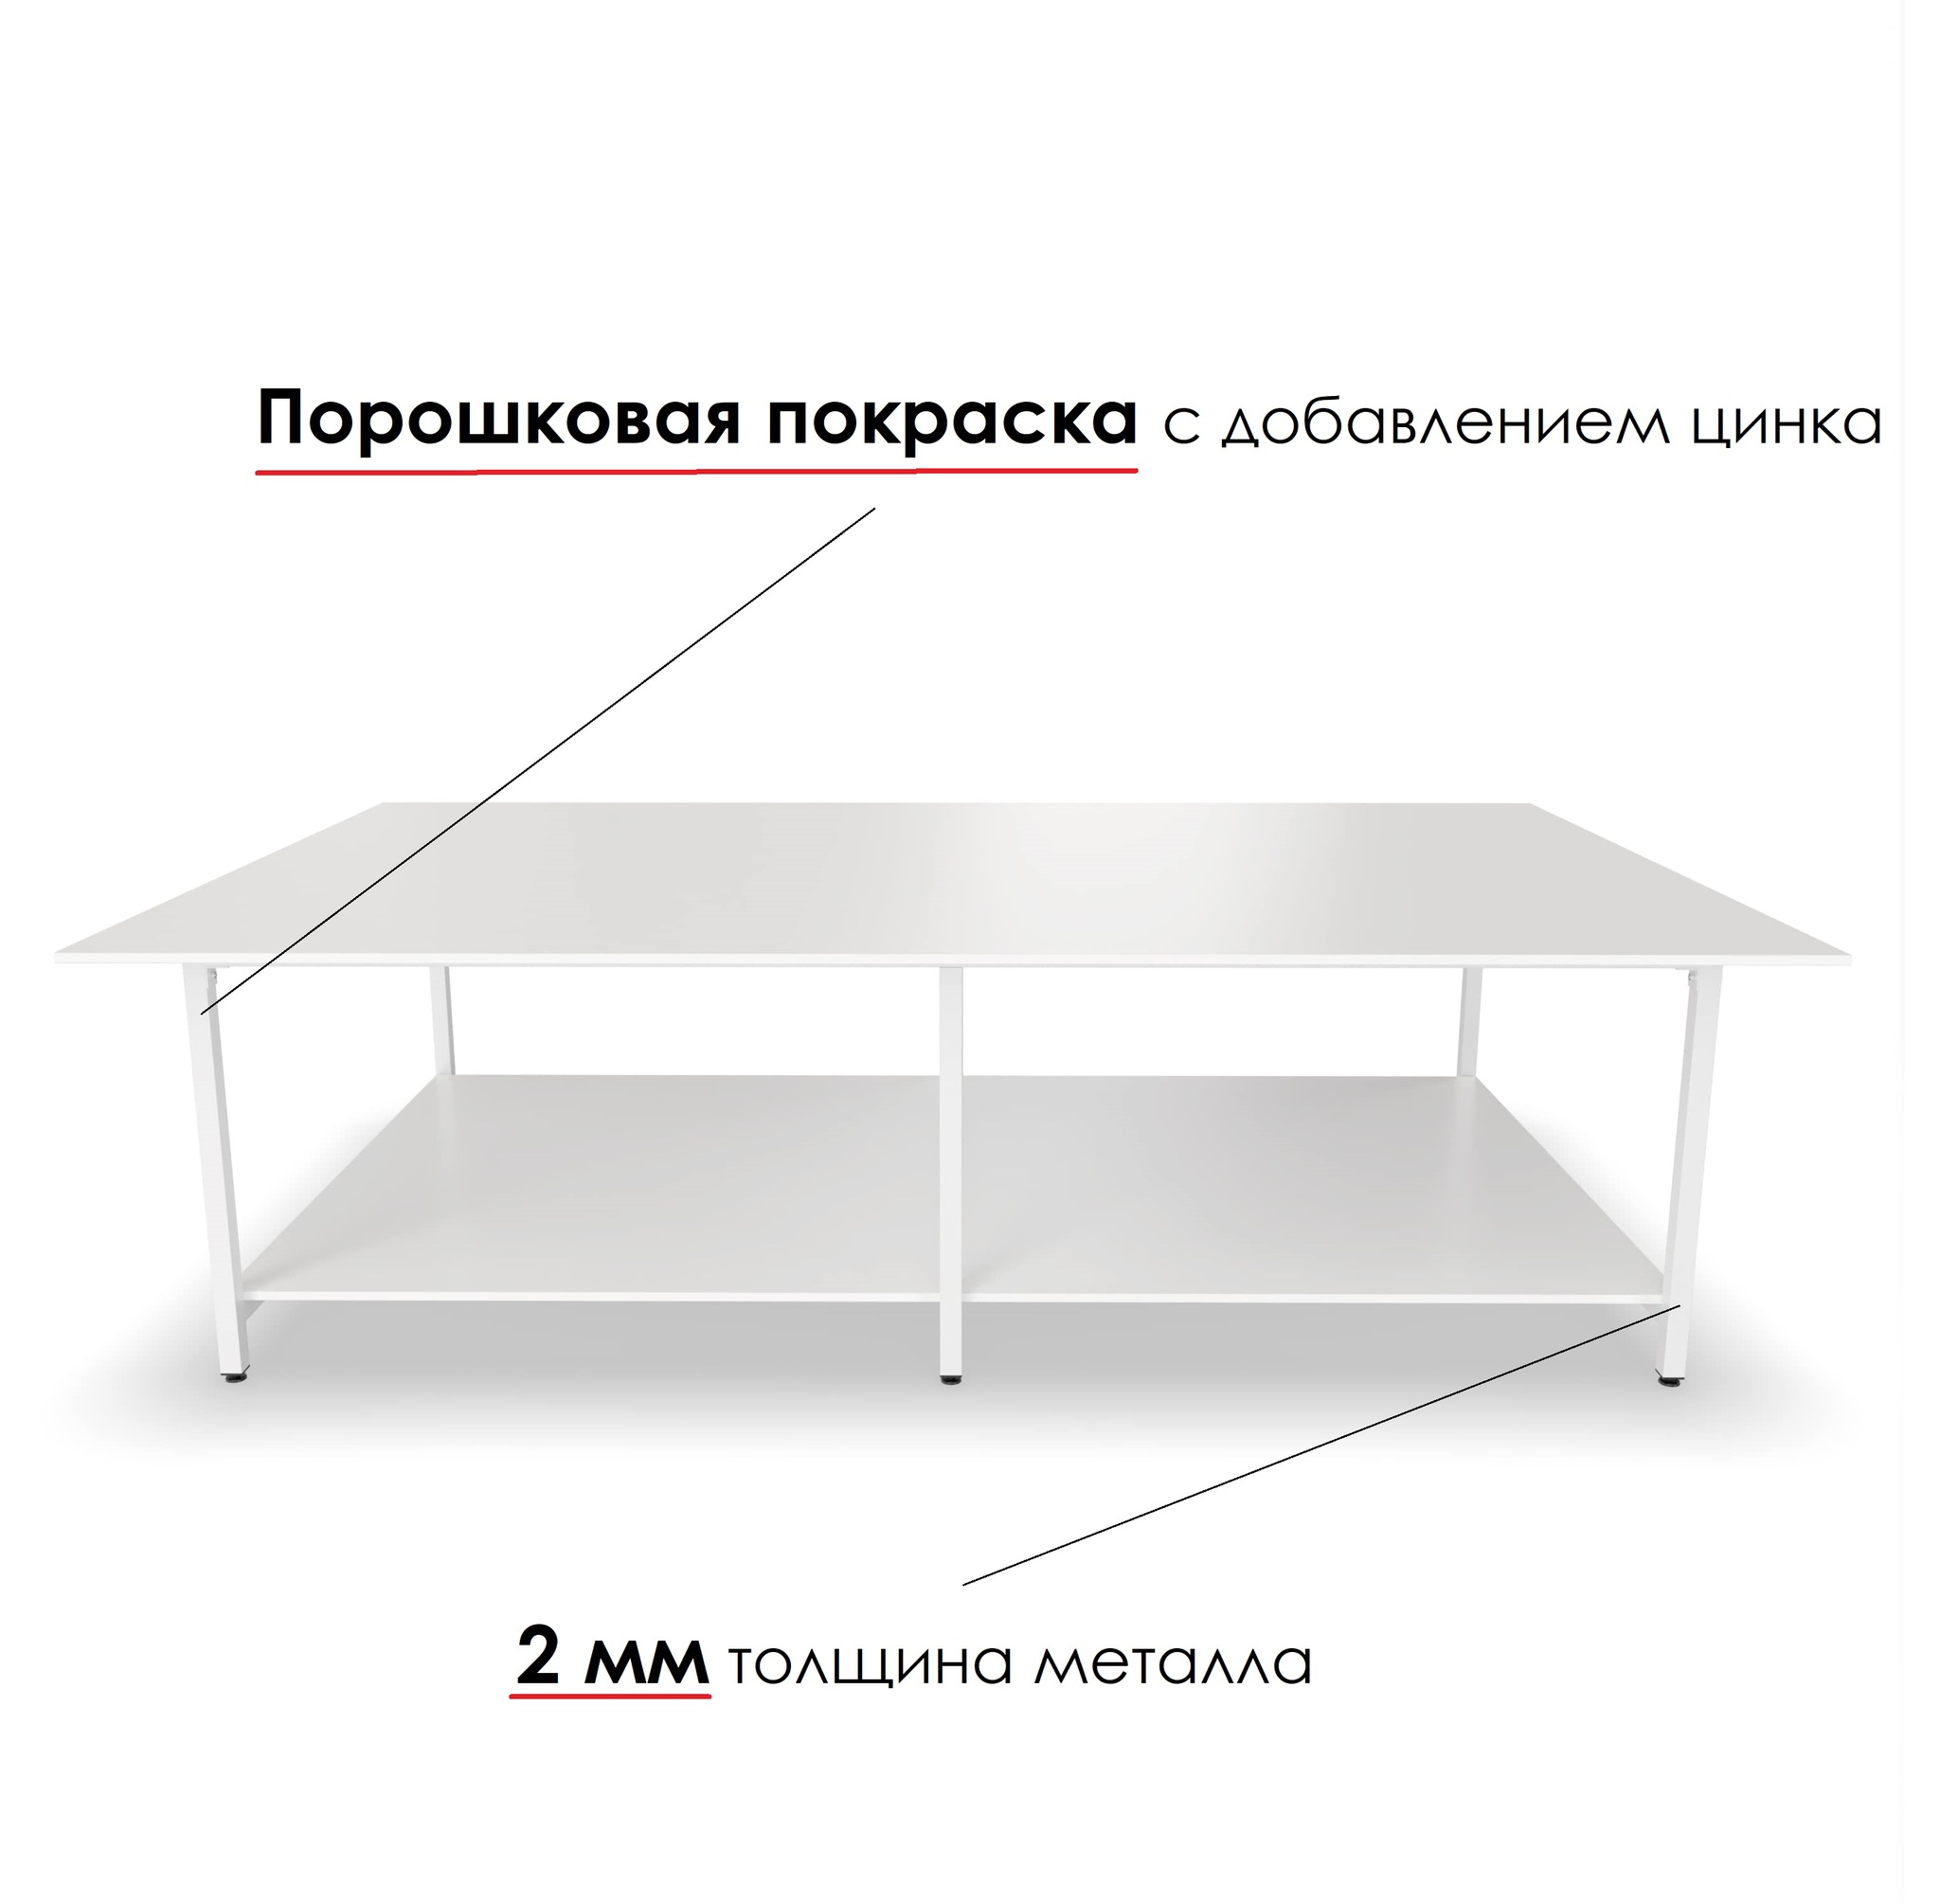 REXEL SK-3 Раскройный стол (длина 13,8 м)